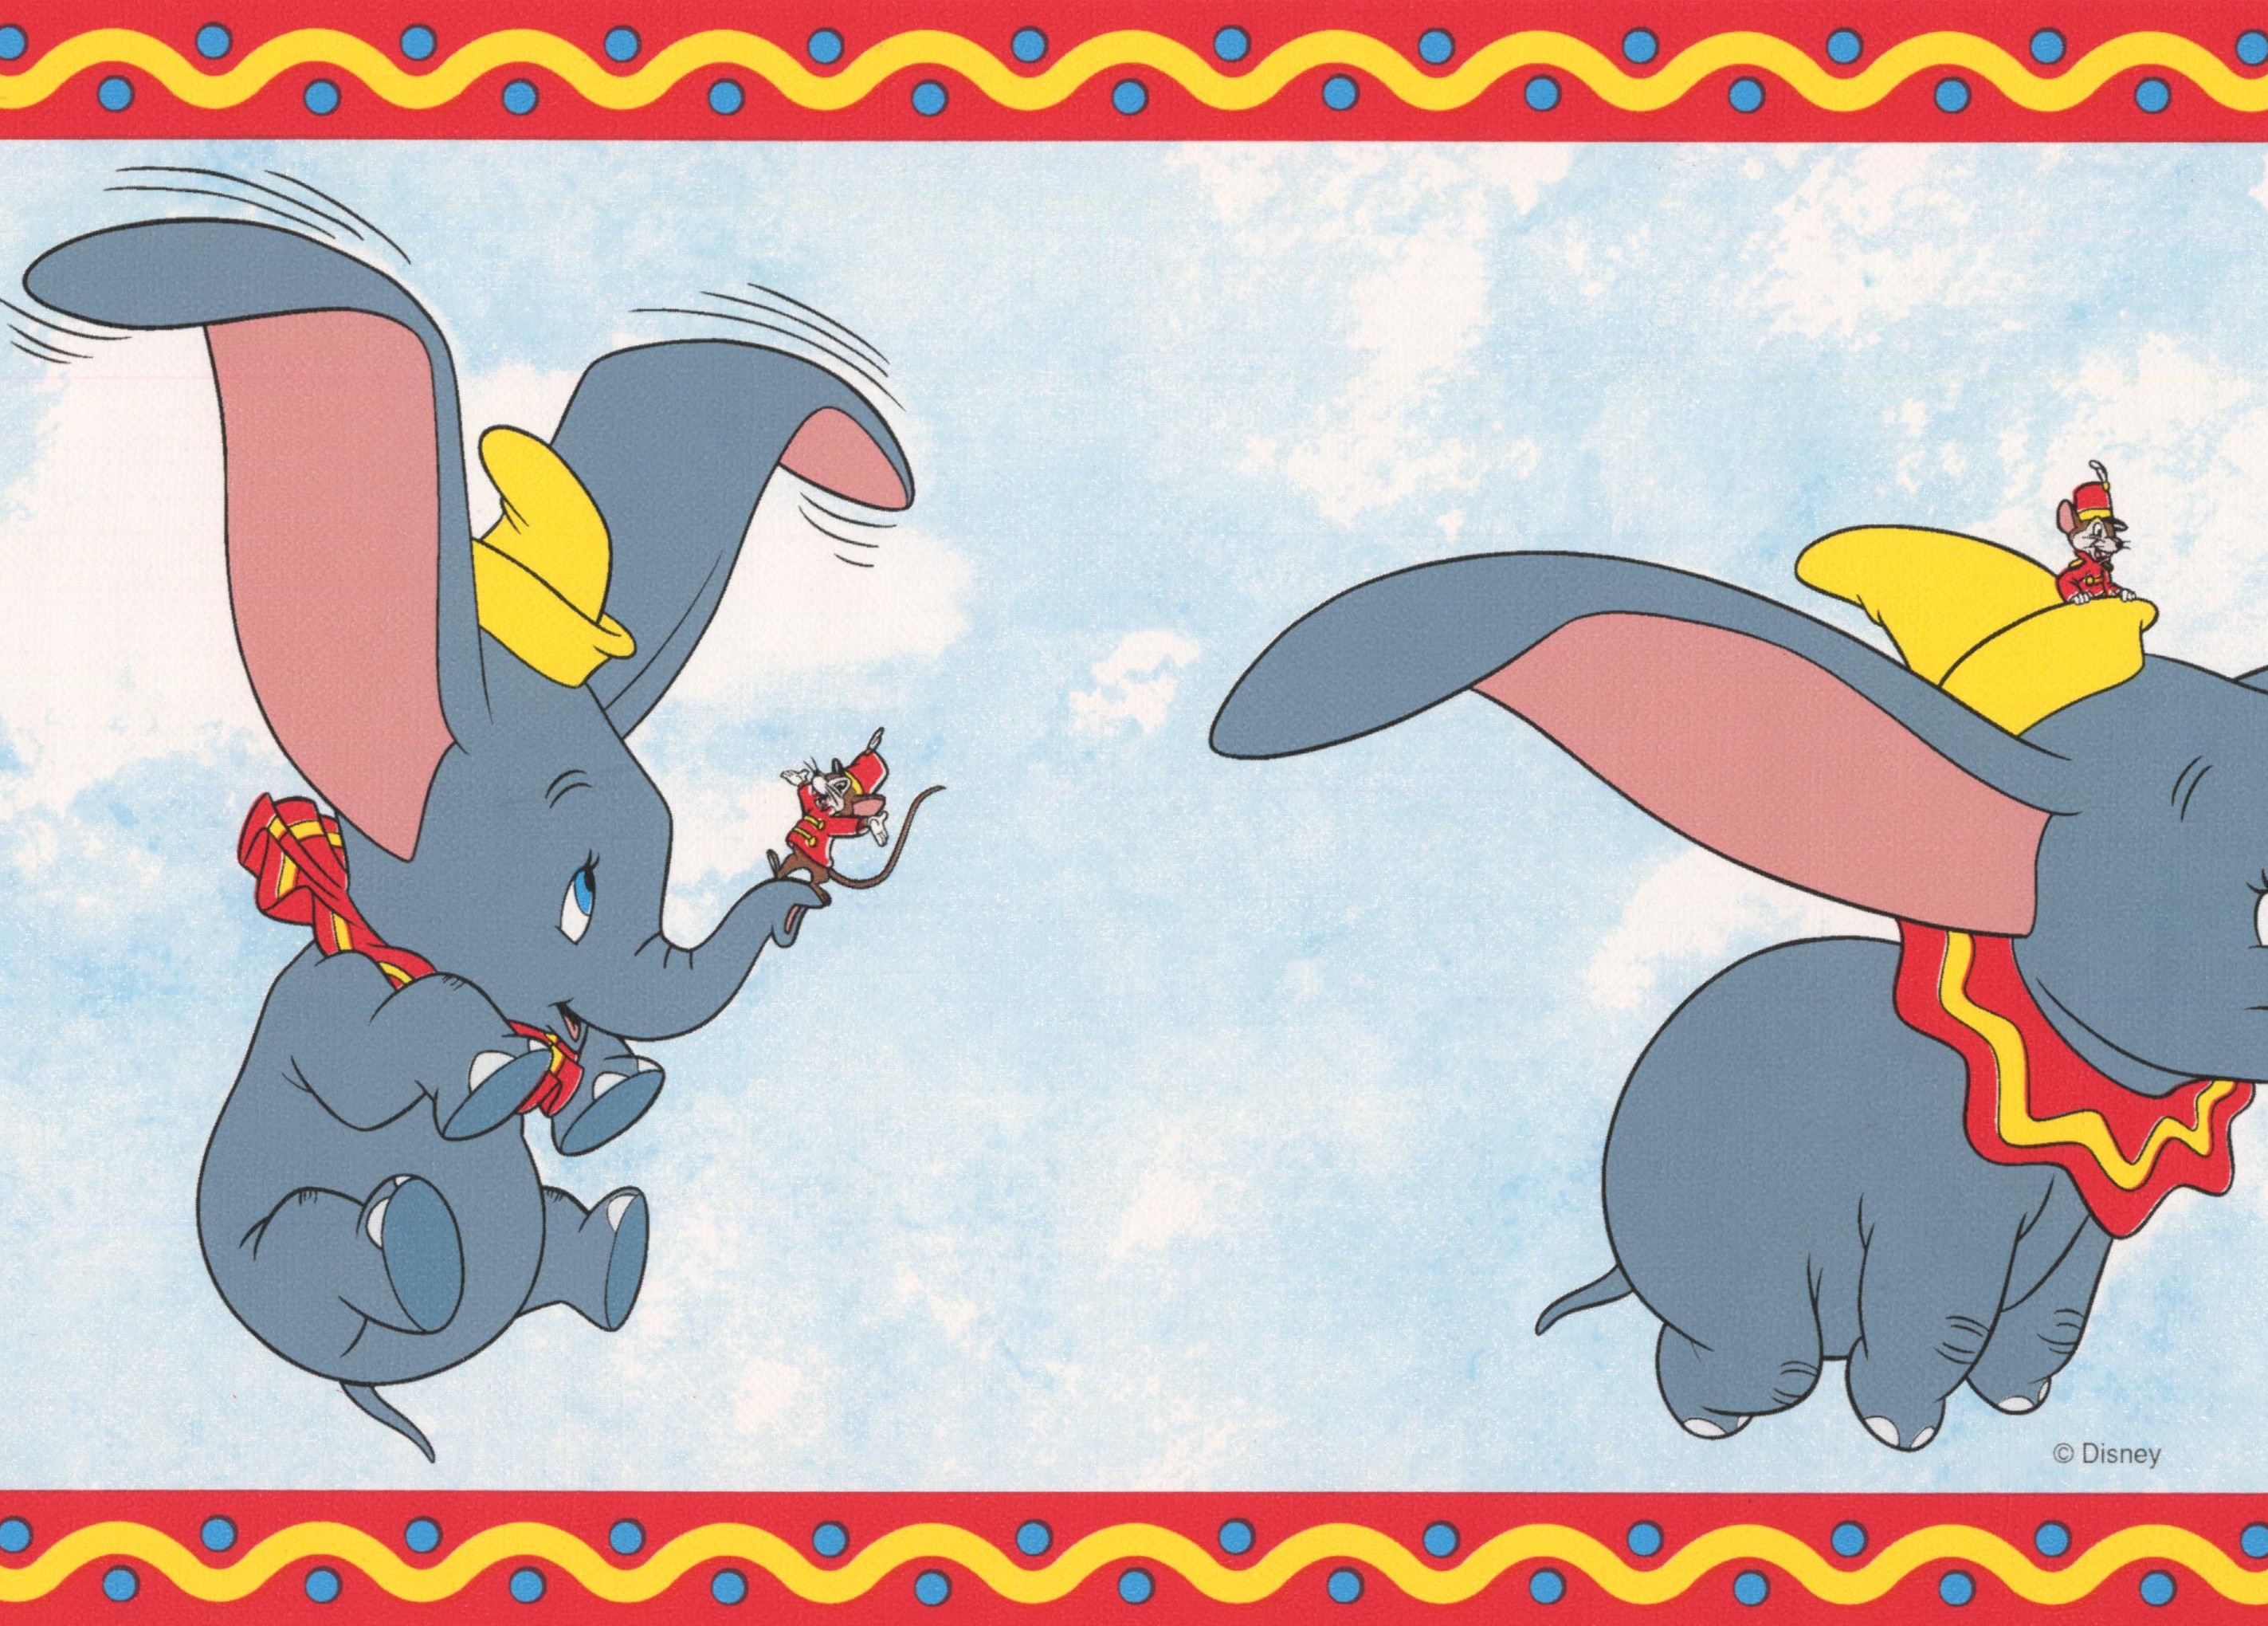 Dumbo the Elephant Disney Cartoon Wallpaper Border, Blue, Red Baby Room, Roll 15' x 7''